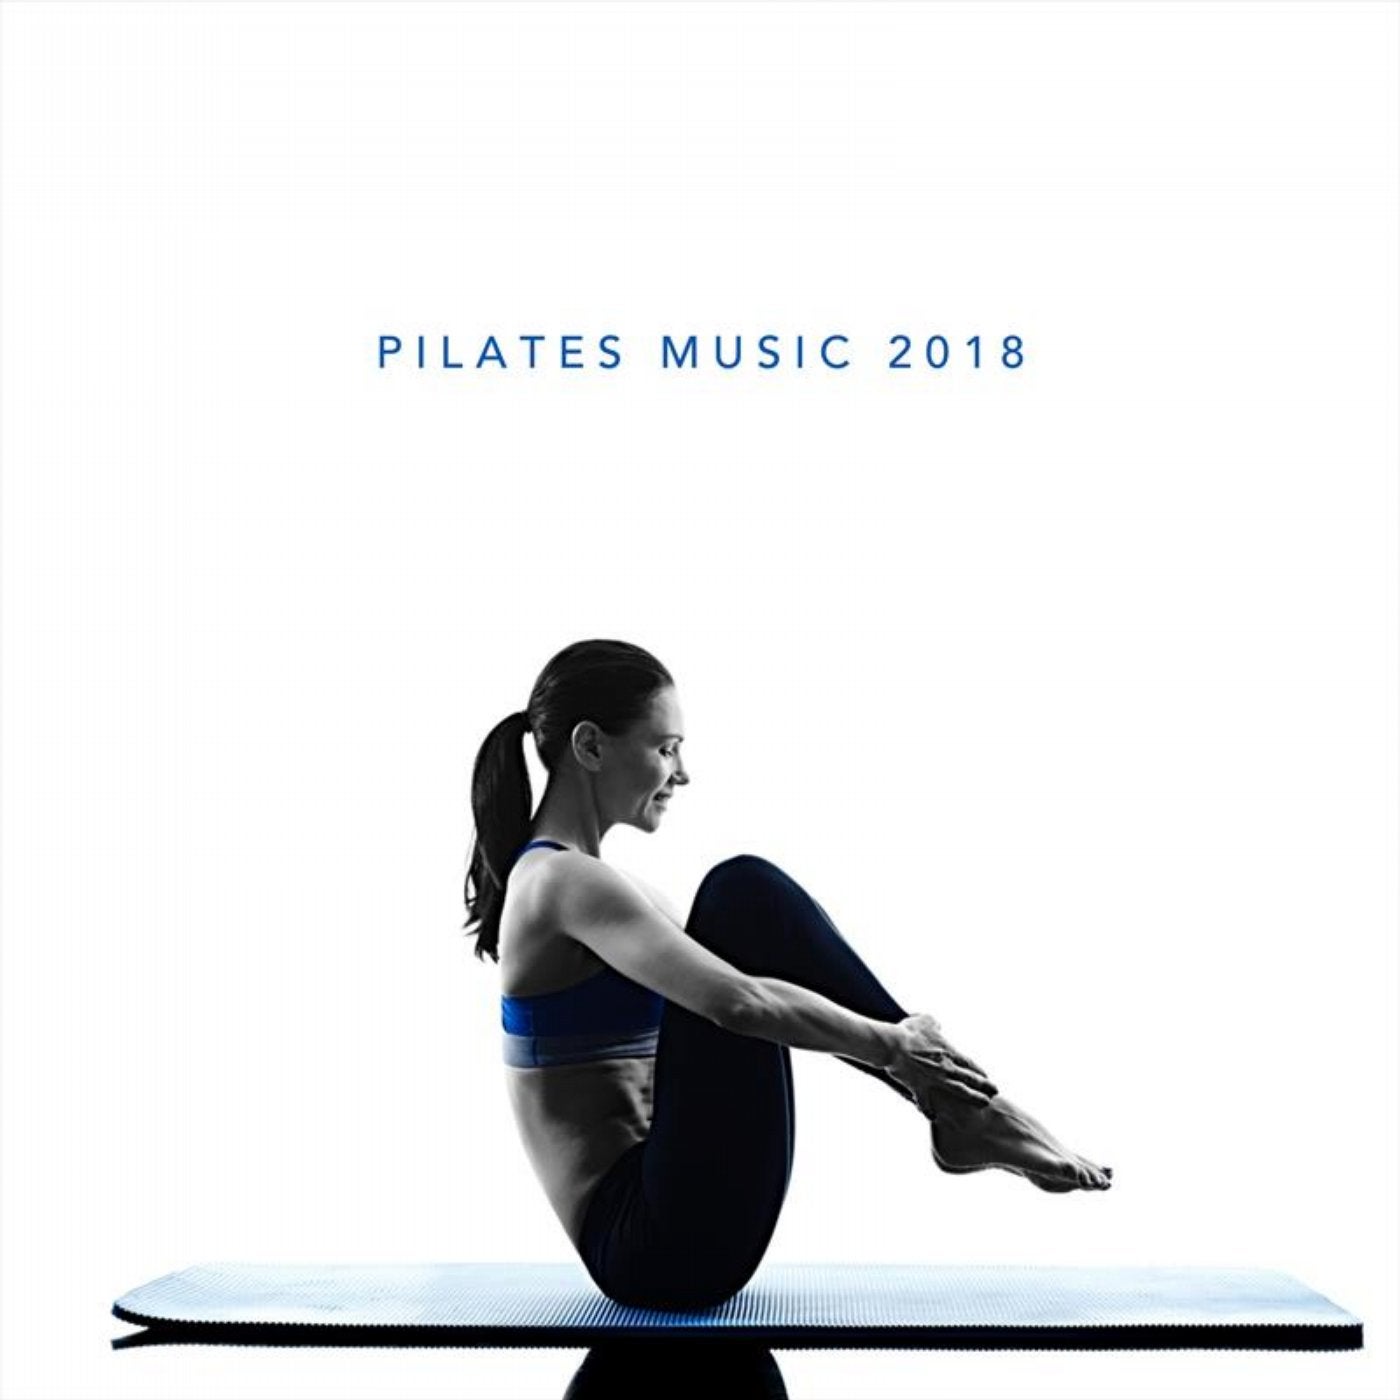 Pilates Music 2018